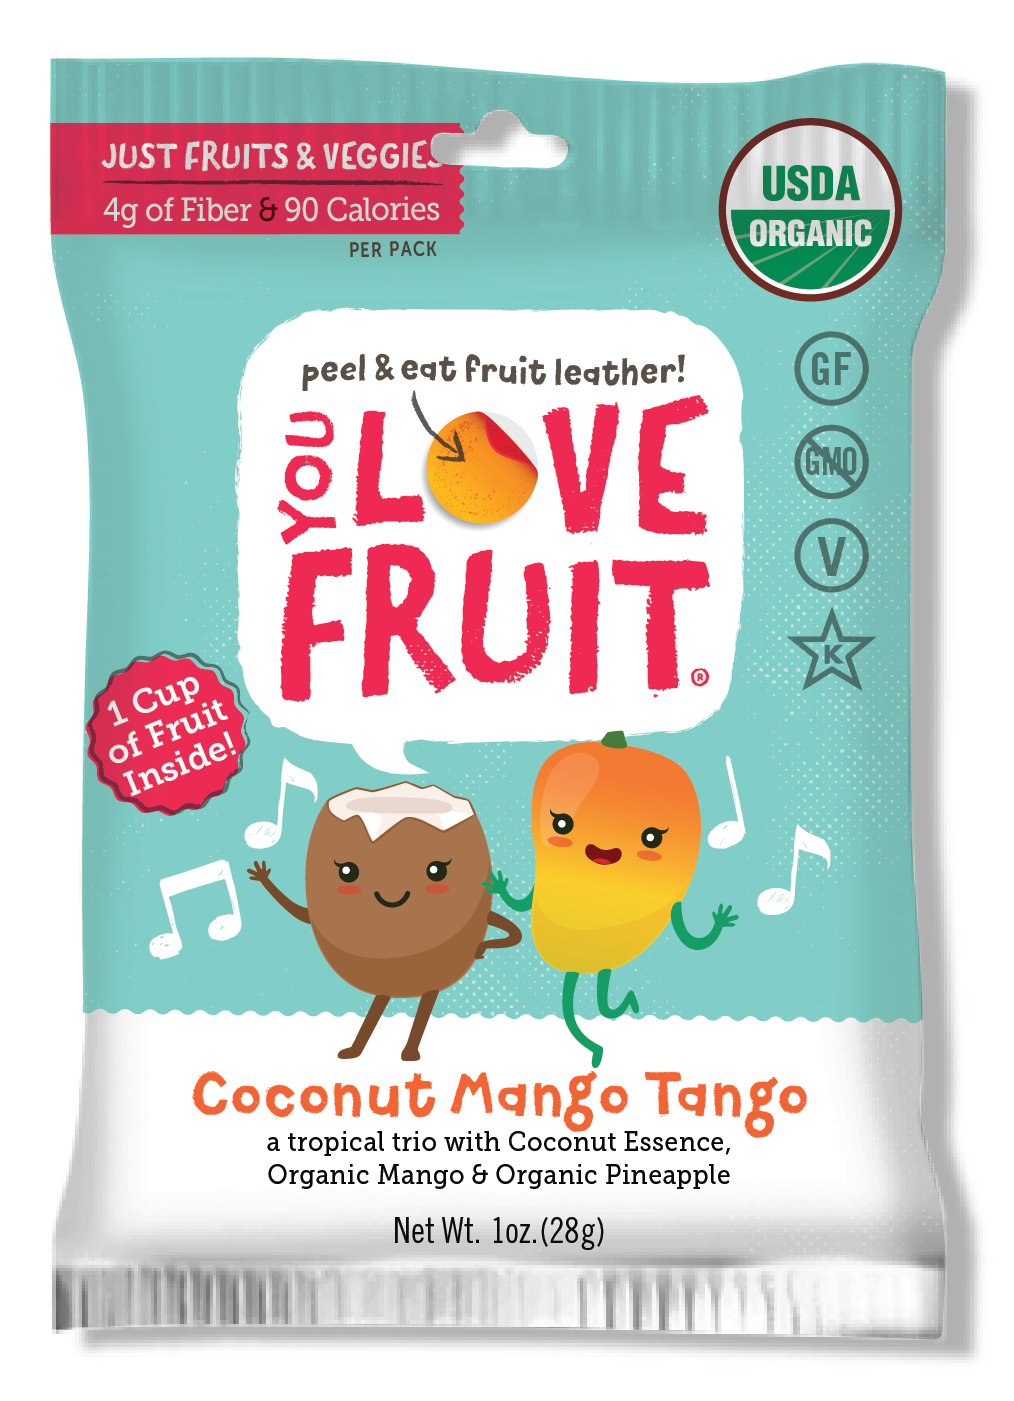 Coconut Mango Tango